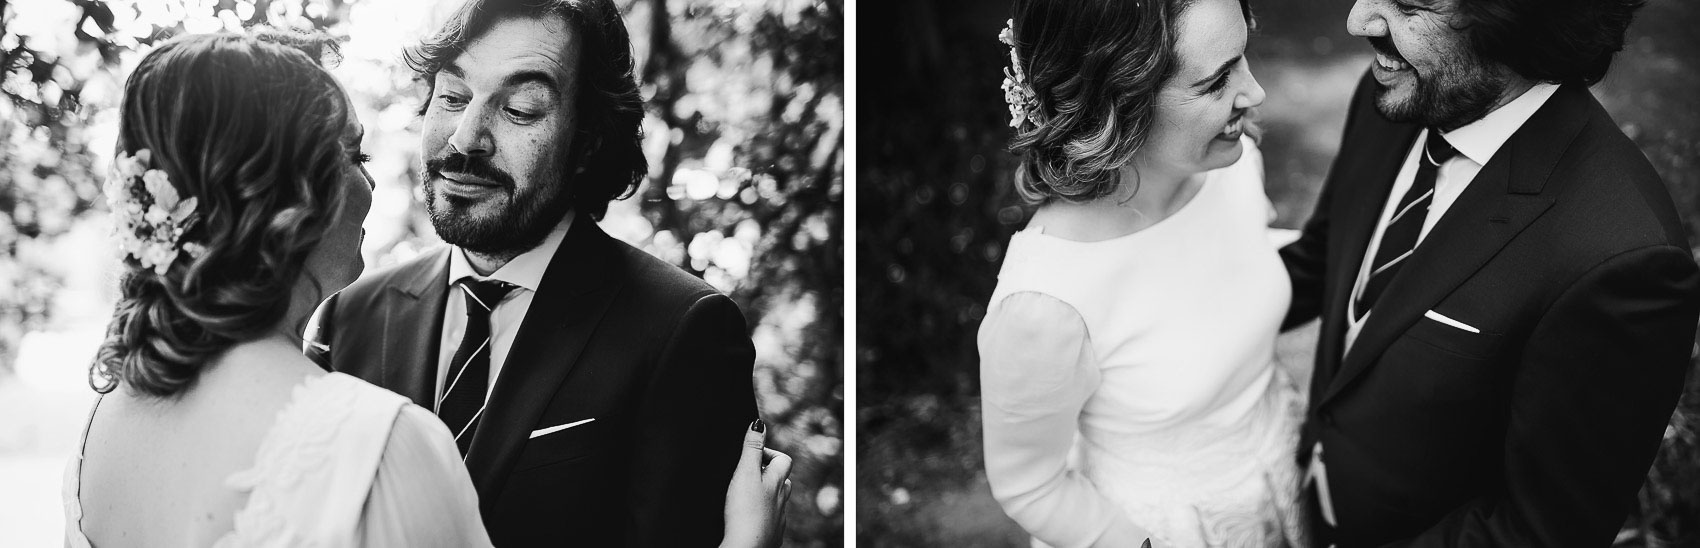 wedding photography black white details